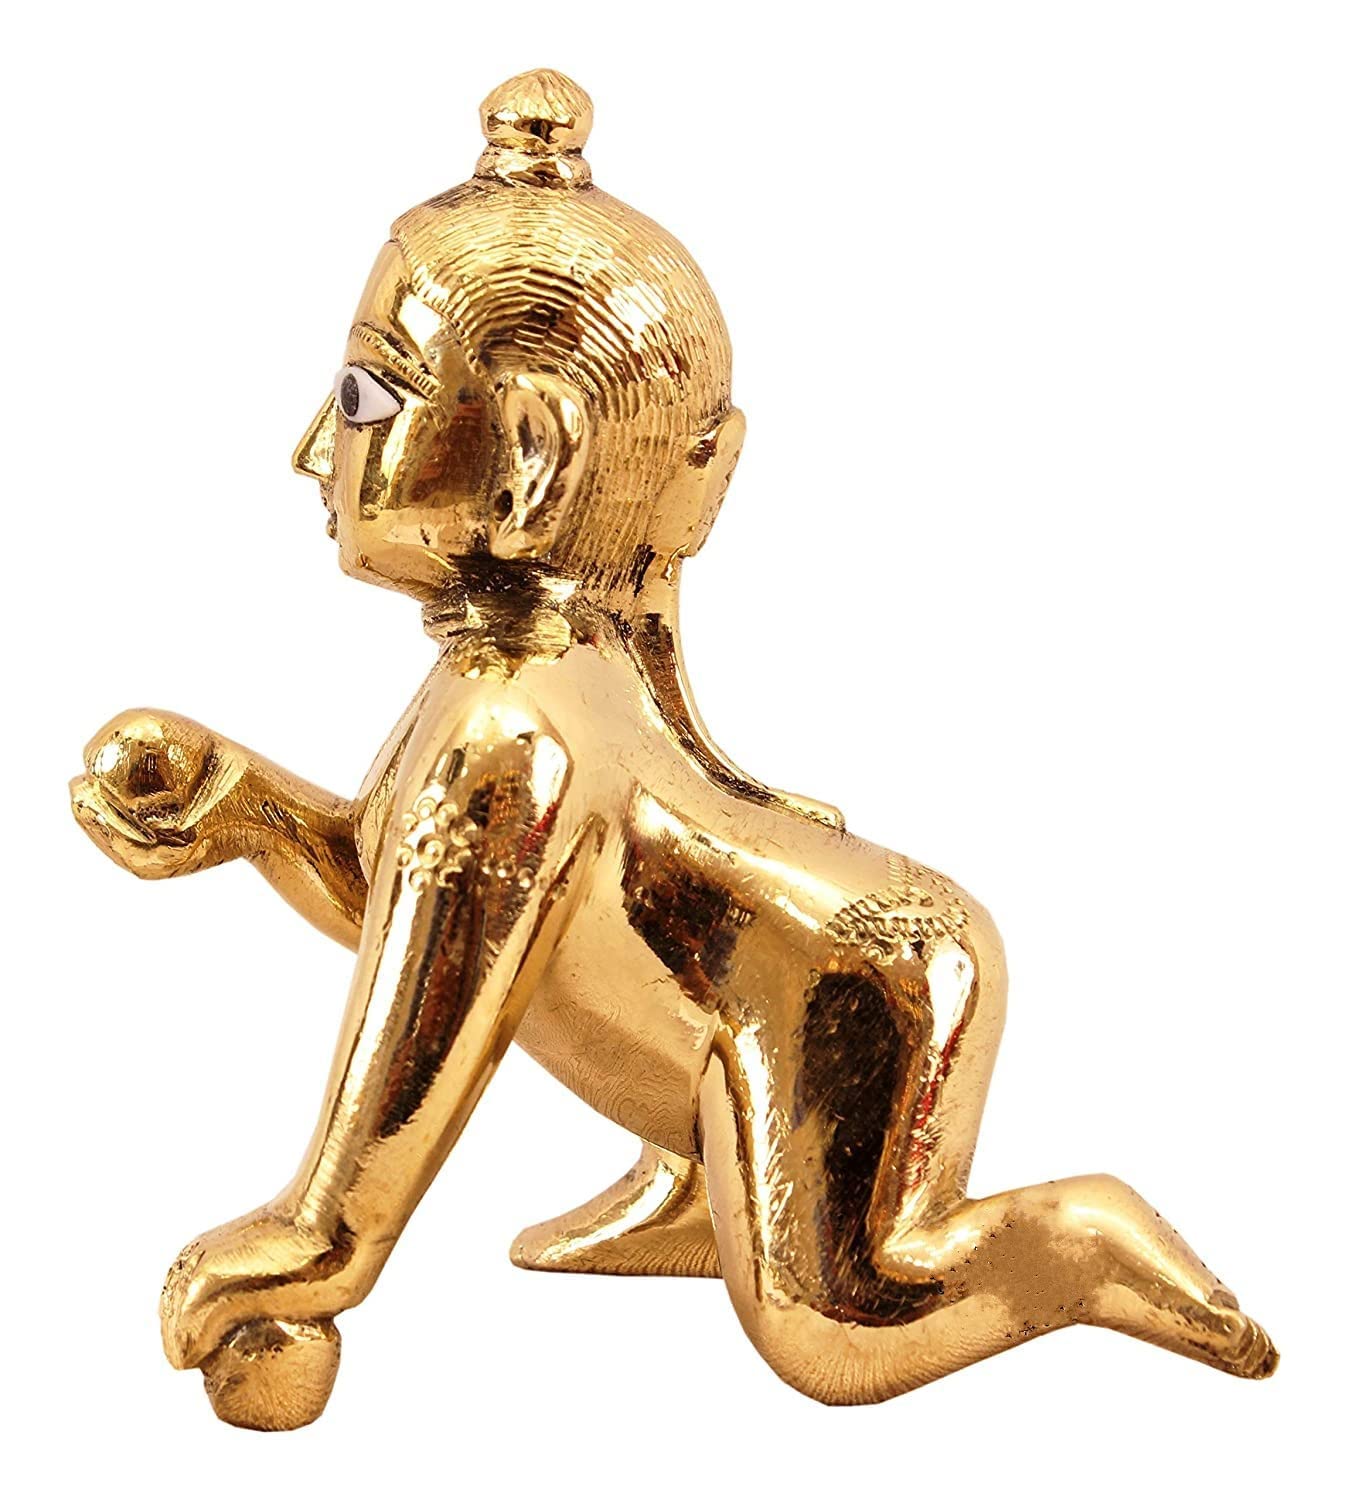 Pujahome Laddu Gopal Idol/Bal Gopal/Thakur Ji Pure Brass Idol/Murti Made in Vrindavan - Size 1